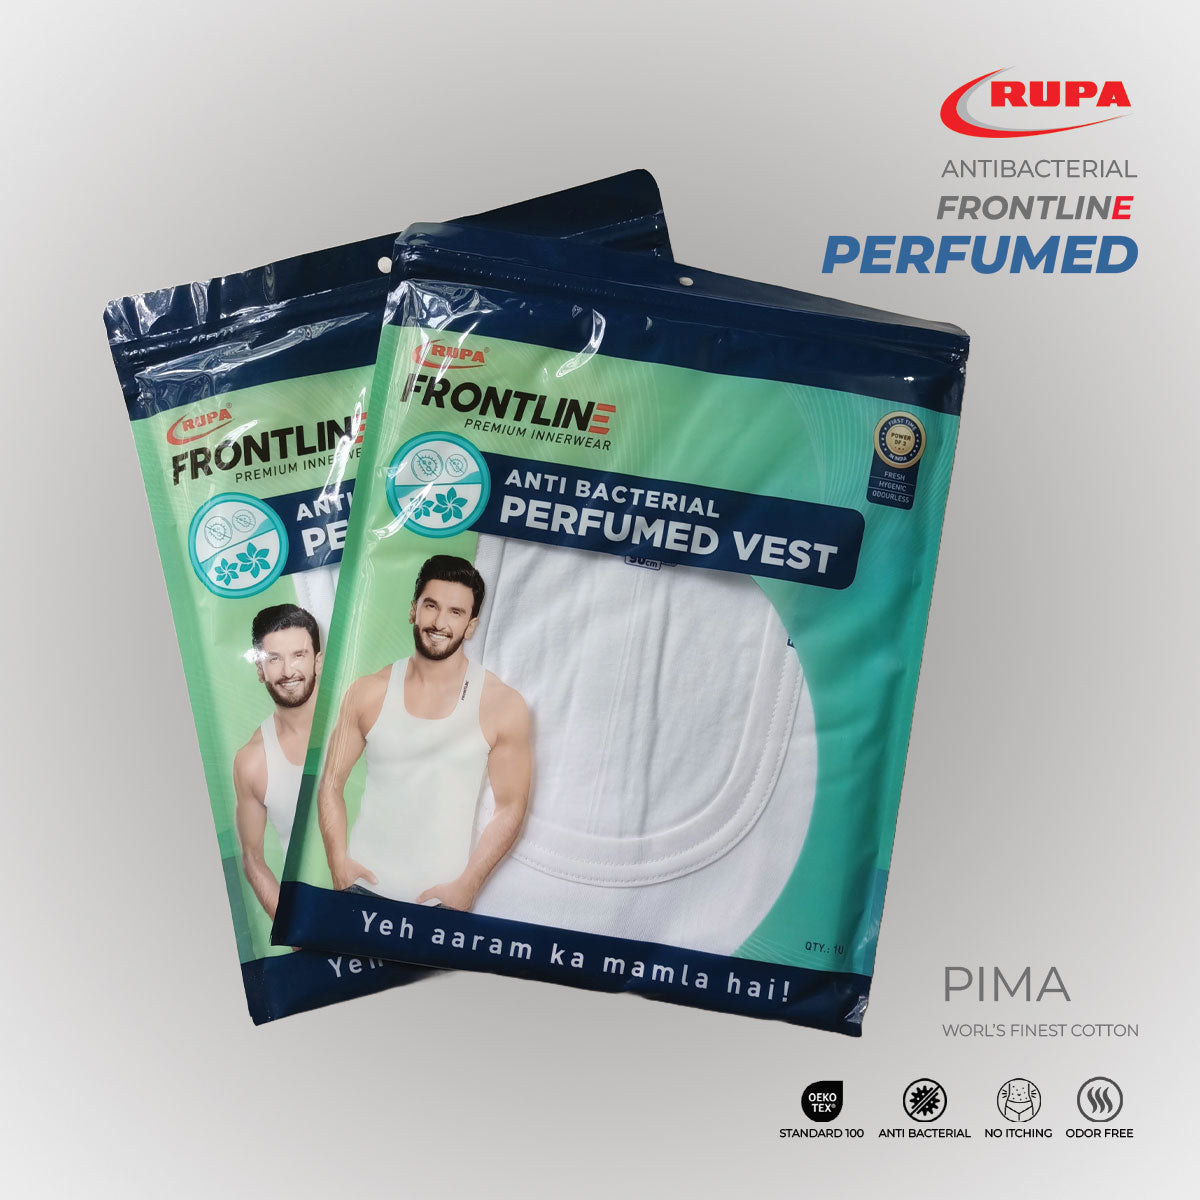 3Pieces Rupa Antibacterial Frontline Perfumed Vest VE21101_Qty03